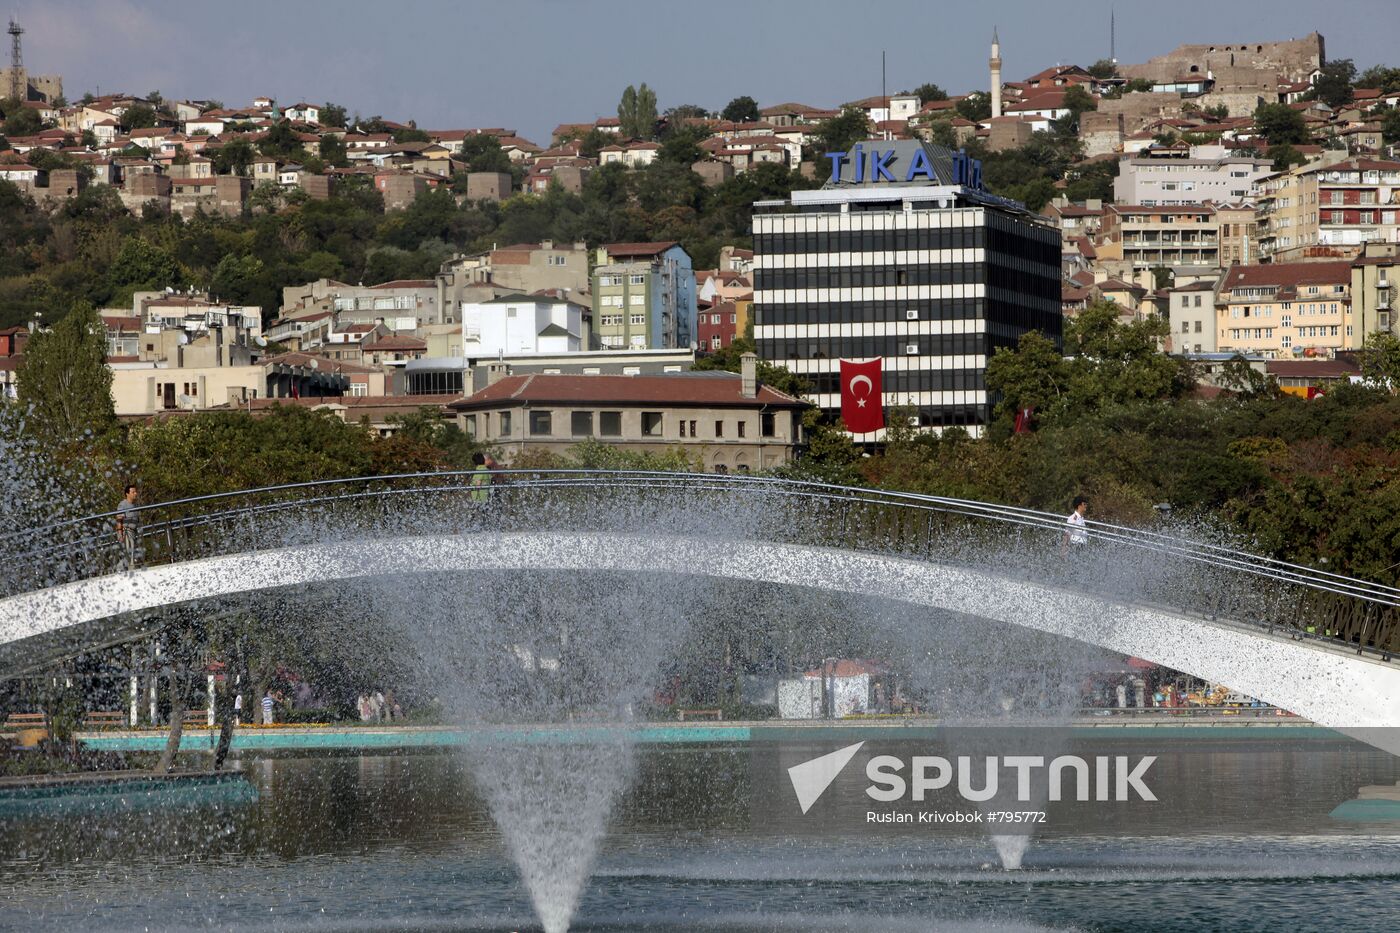 Luna Park in Ankara